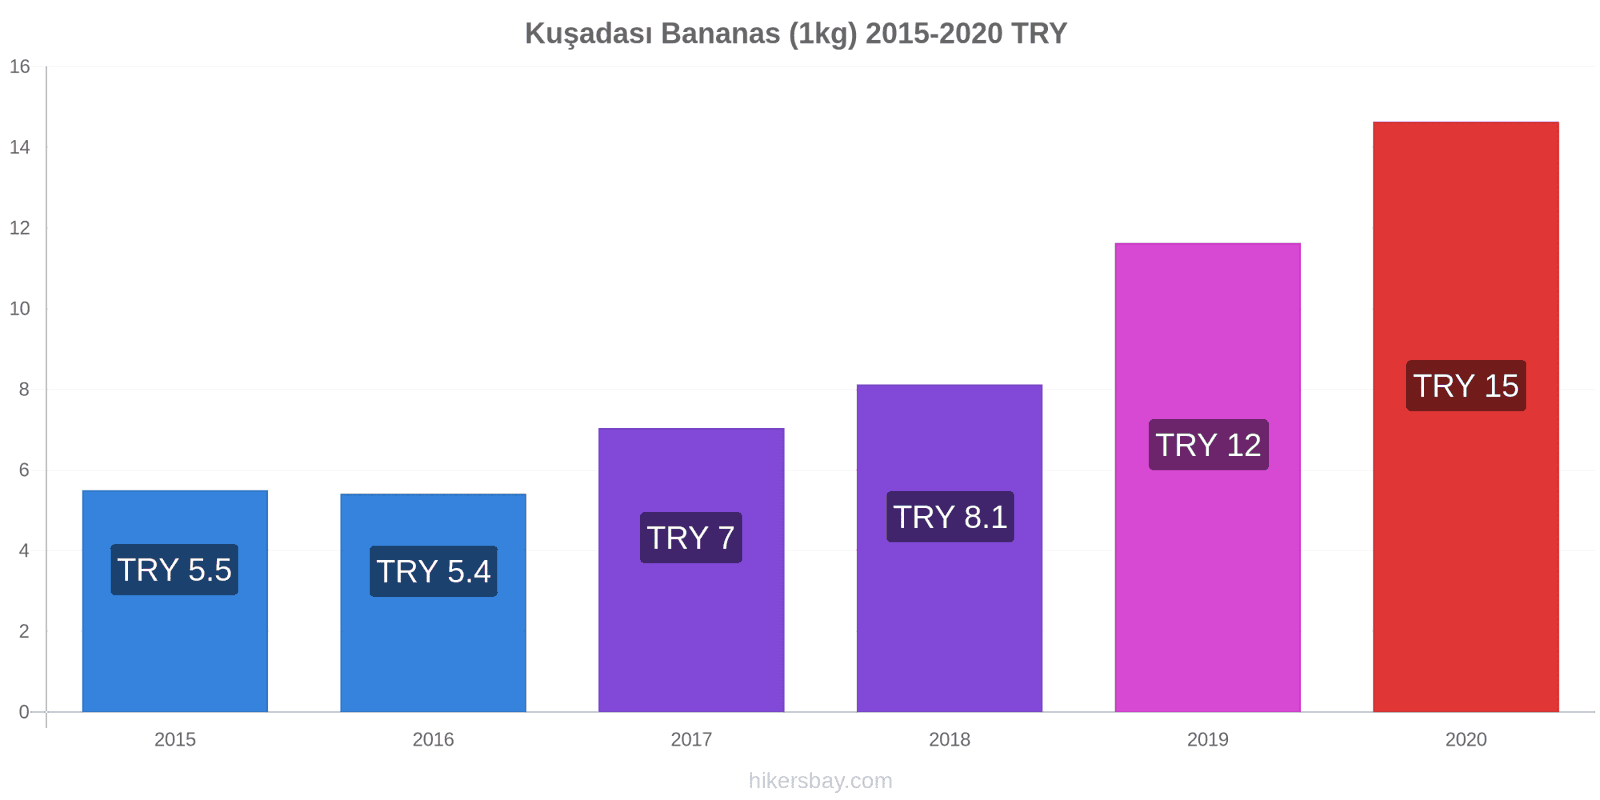 Kuşadası price changes Bananas (1kg) hikersbay.com